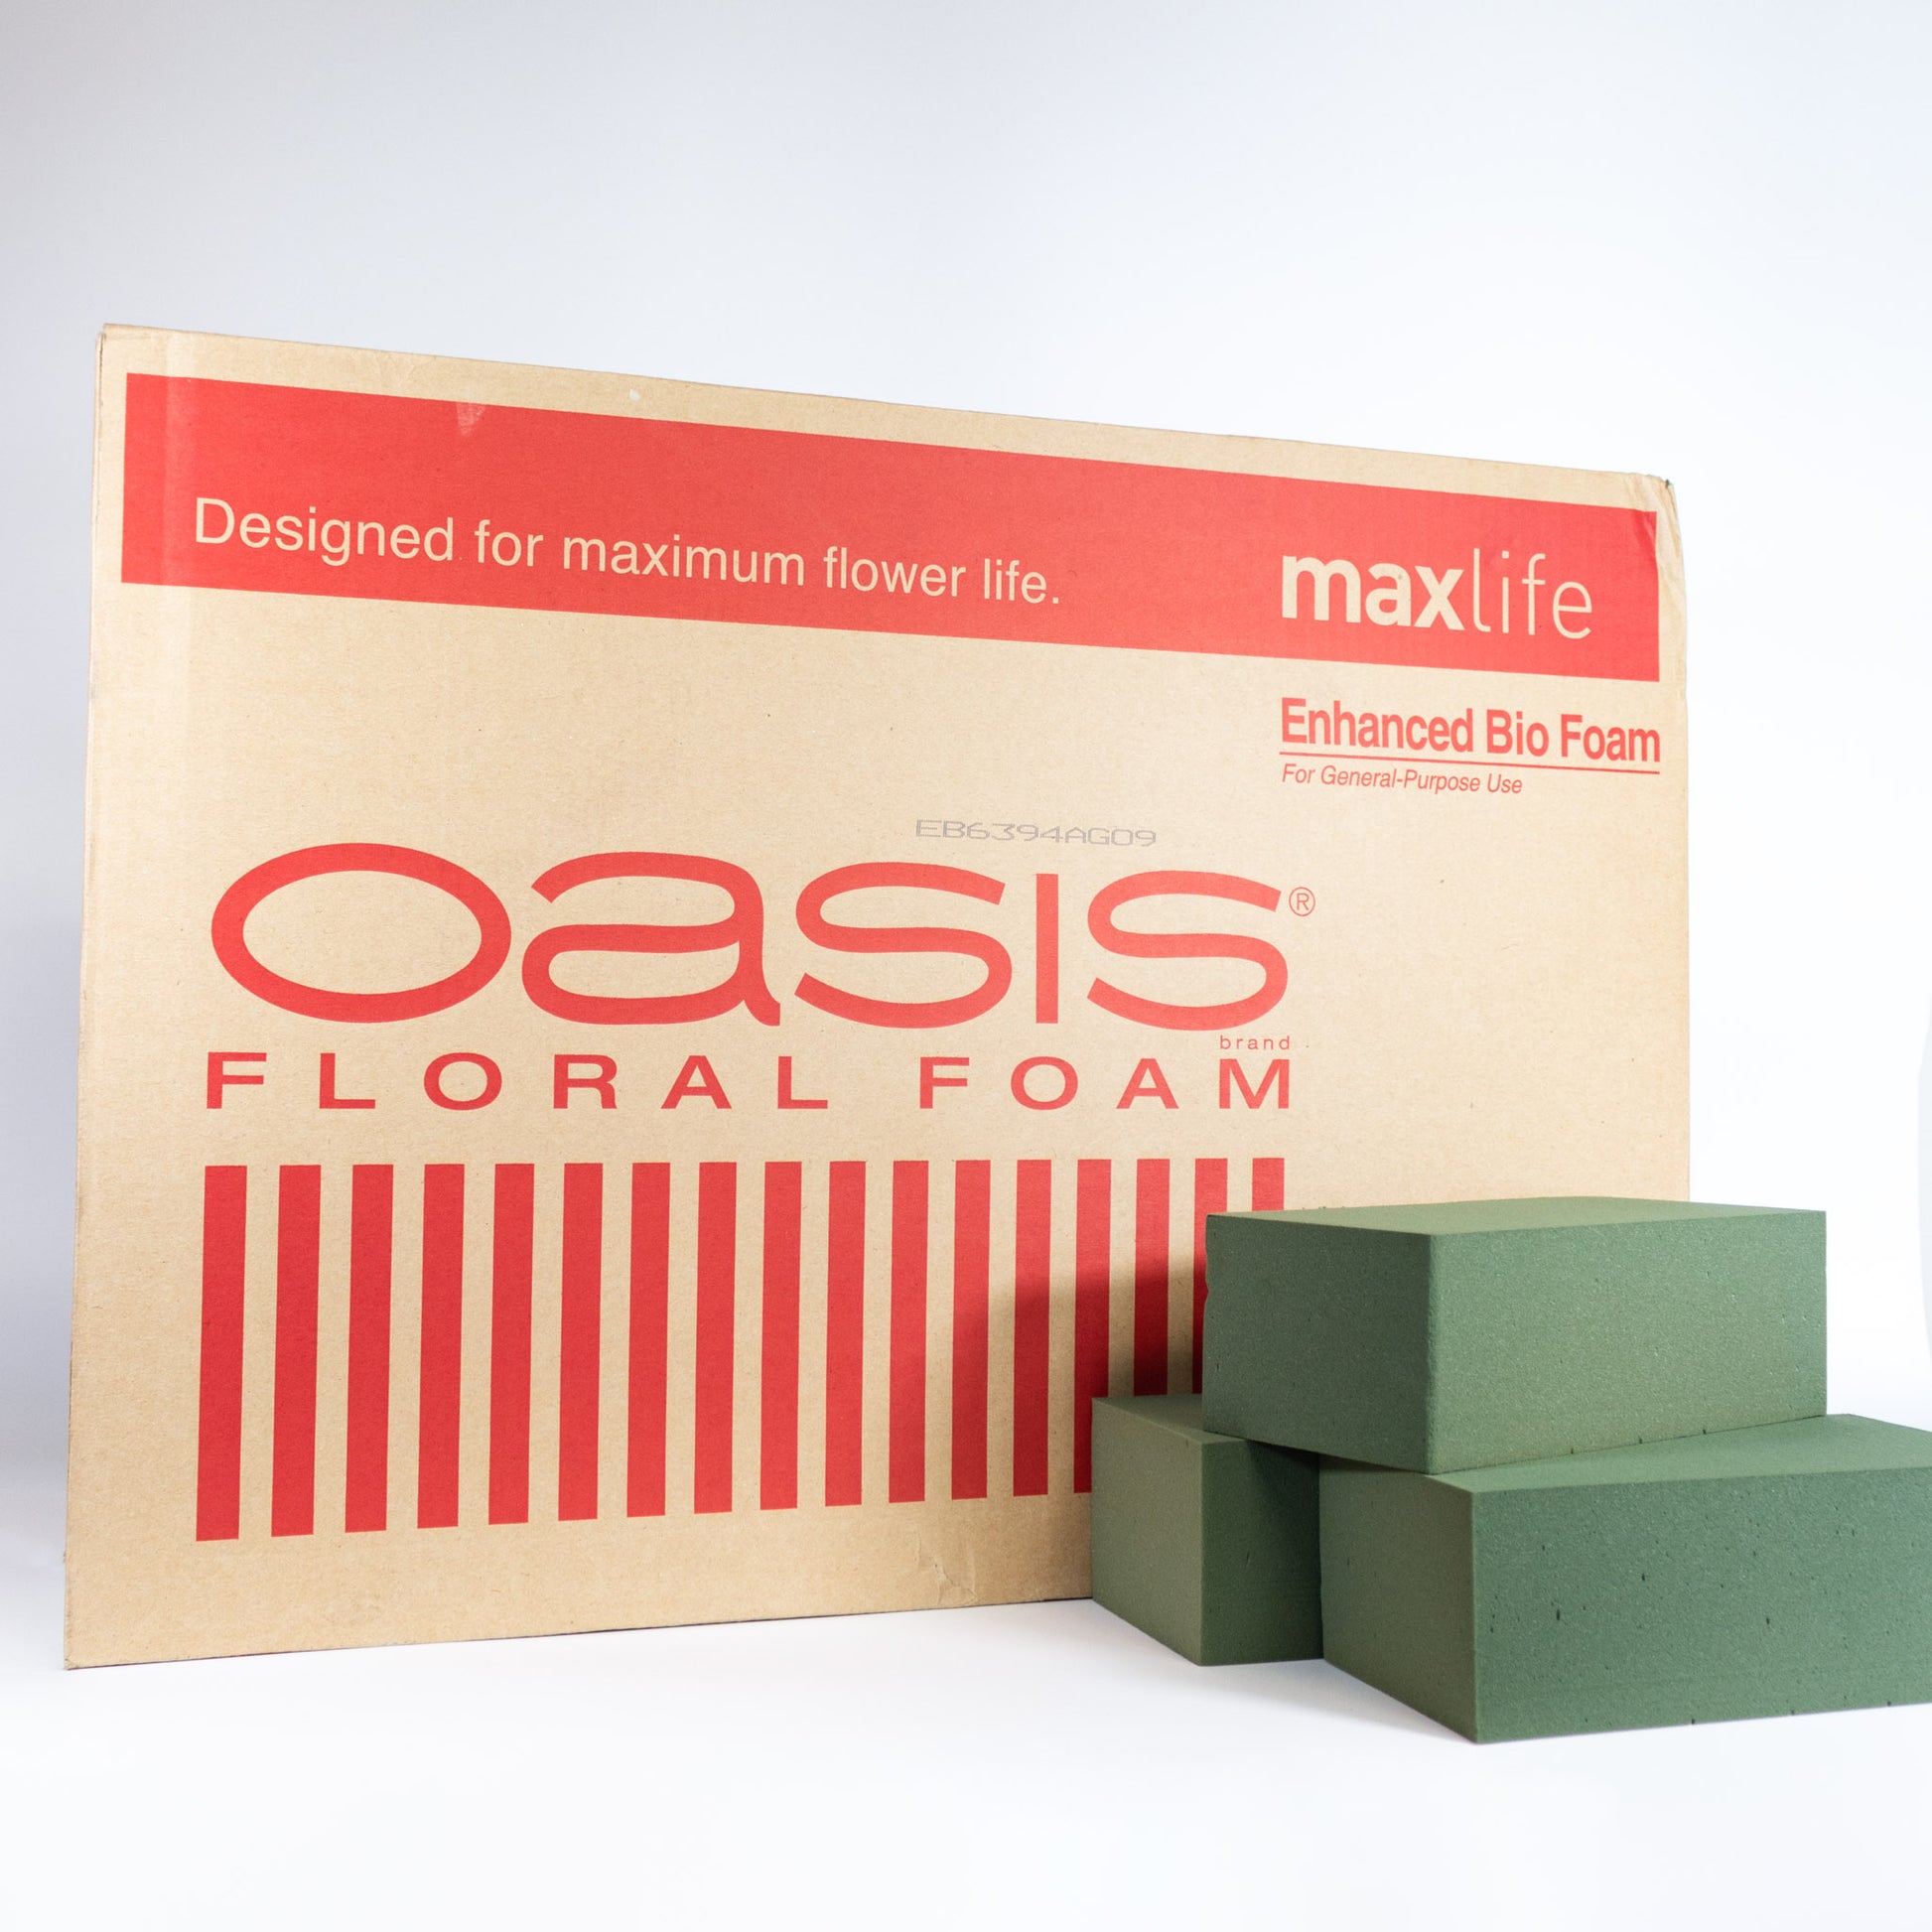 Oasis Maxlife Floral Foam  Indigo & Jade GC Floristry Gift Supplies